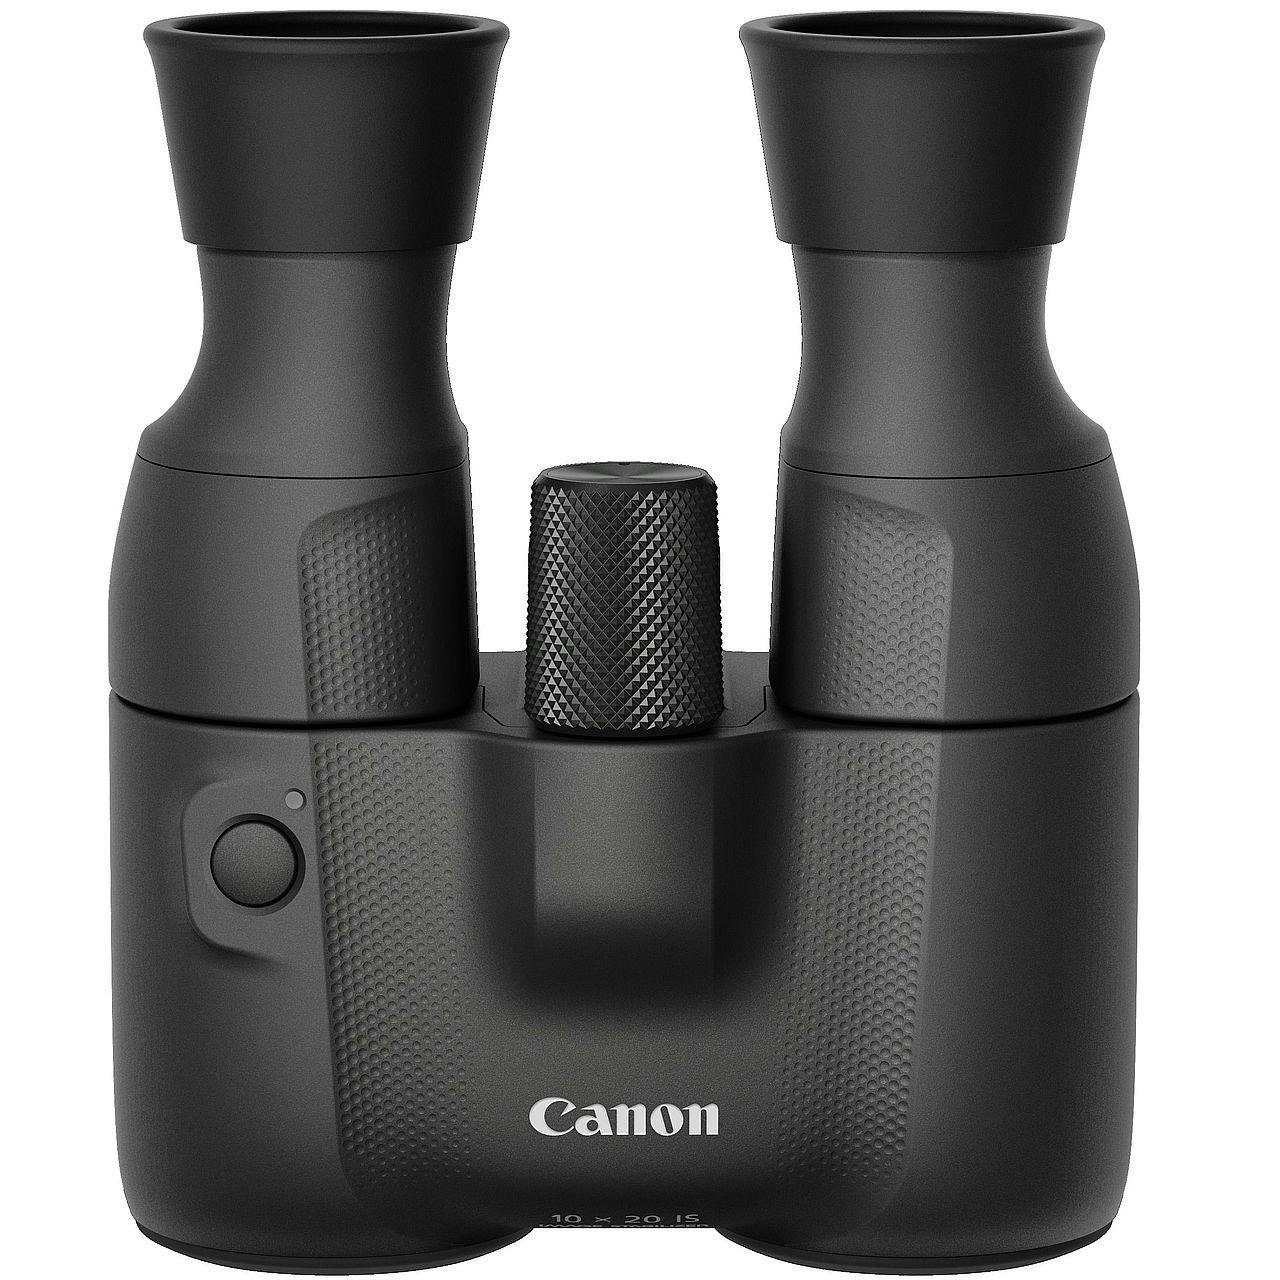 Canon 10x20 IS Fernglas, Porro-Fernglas online kaufen | OTTO